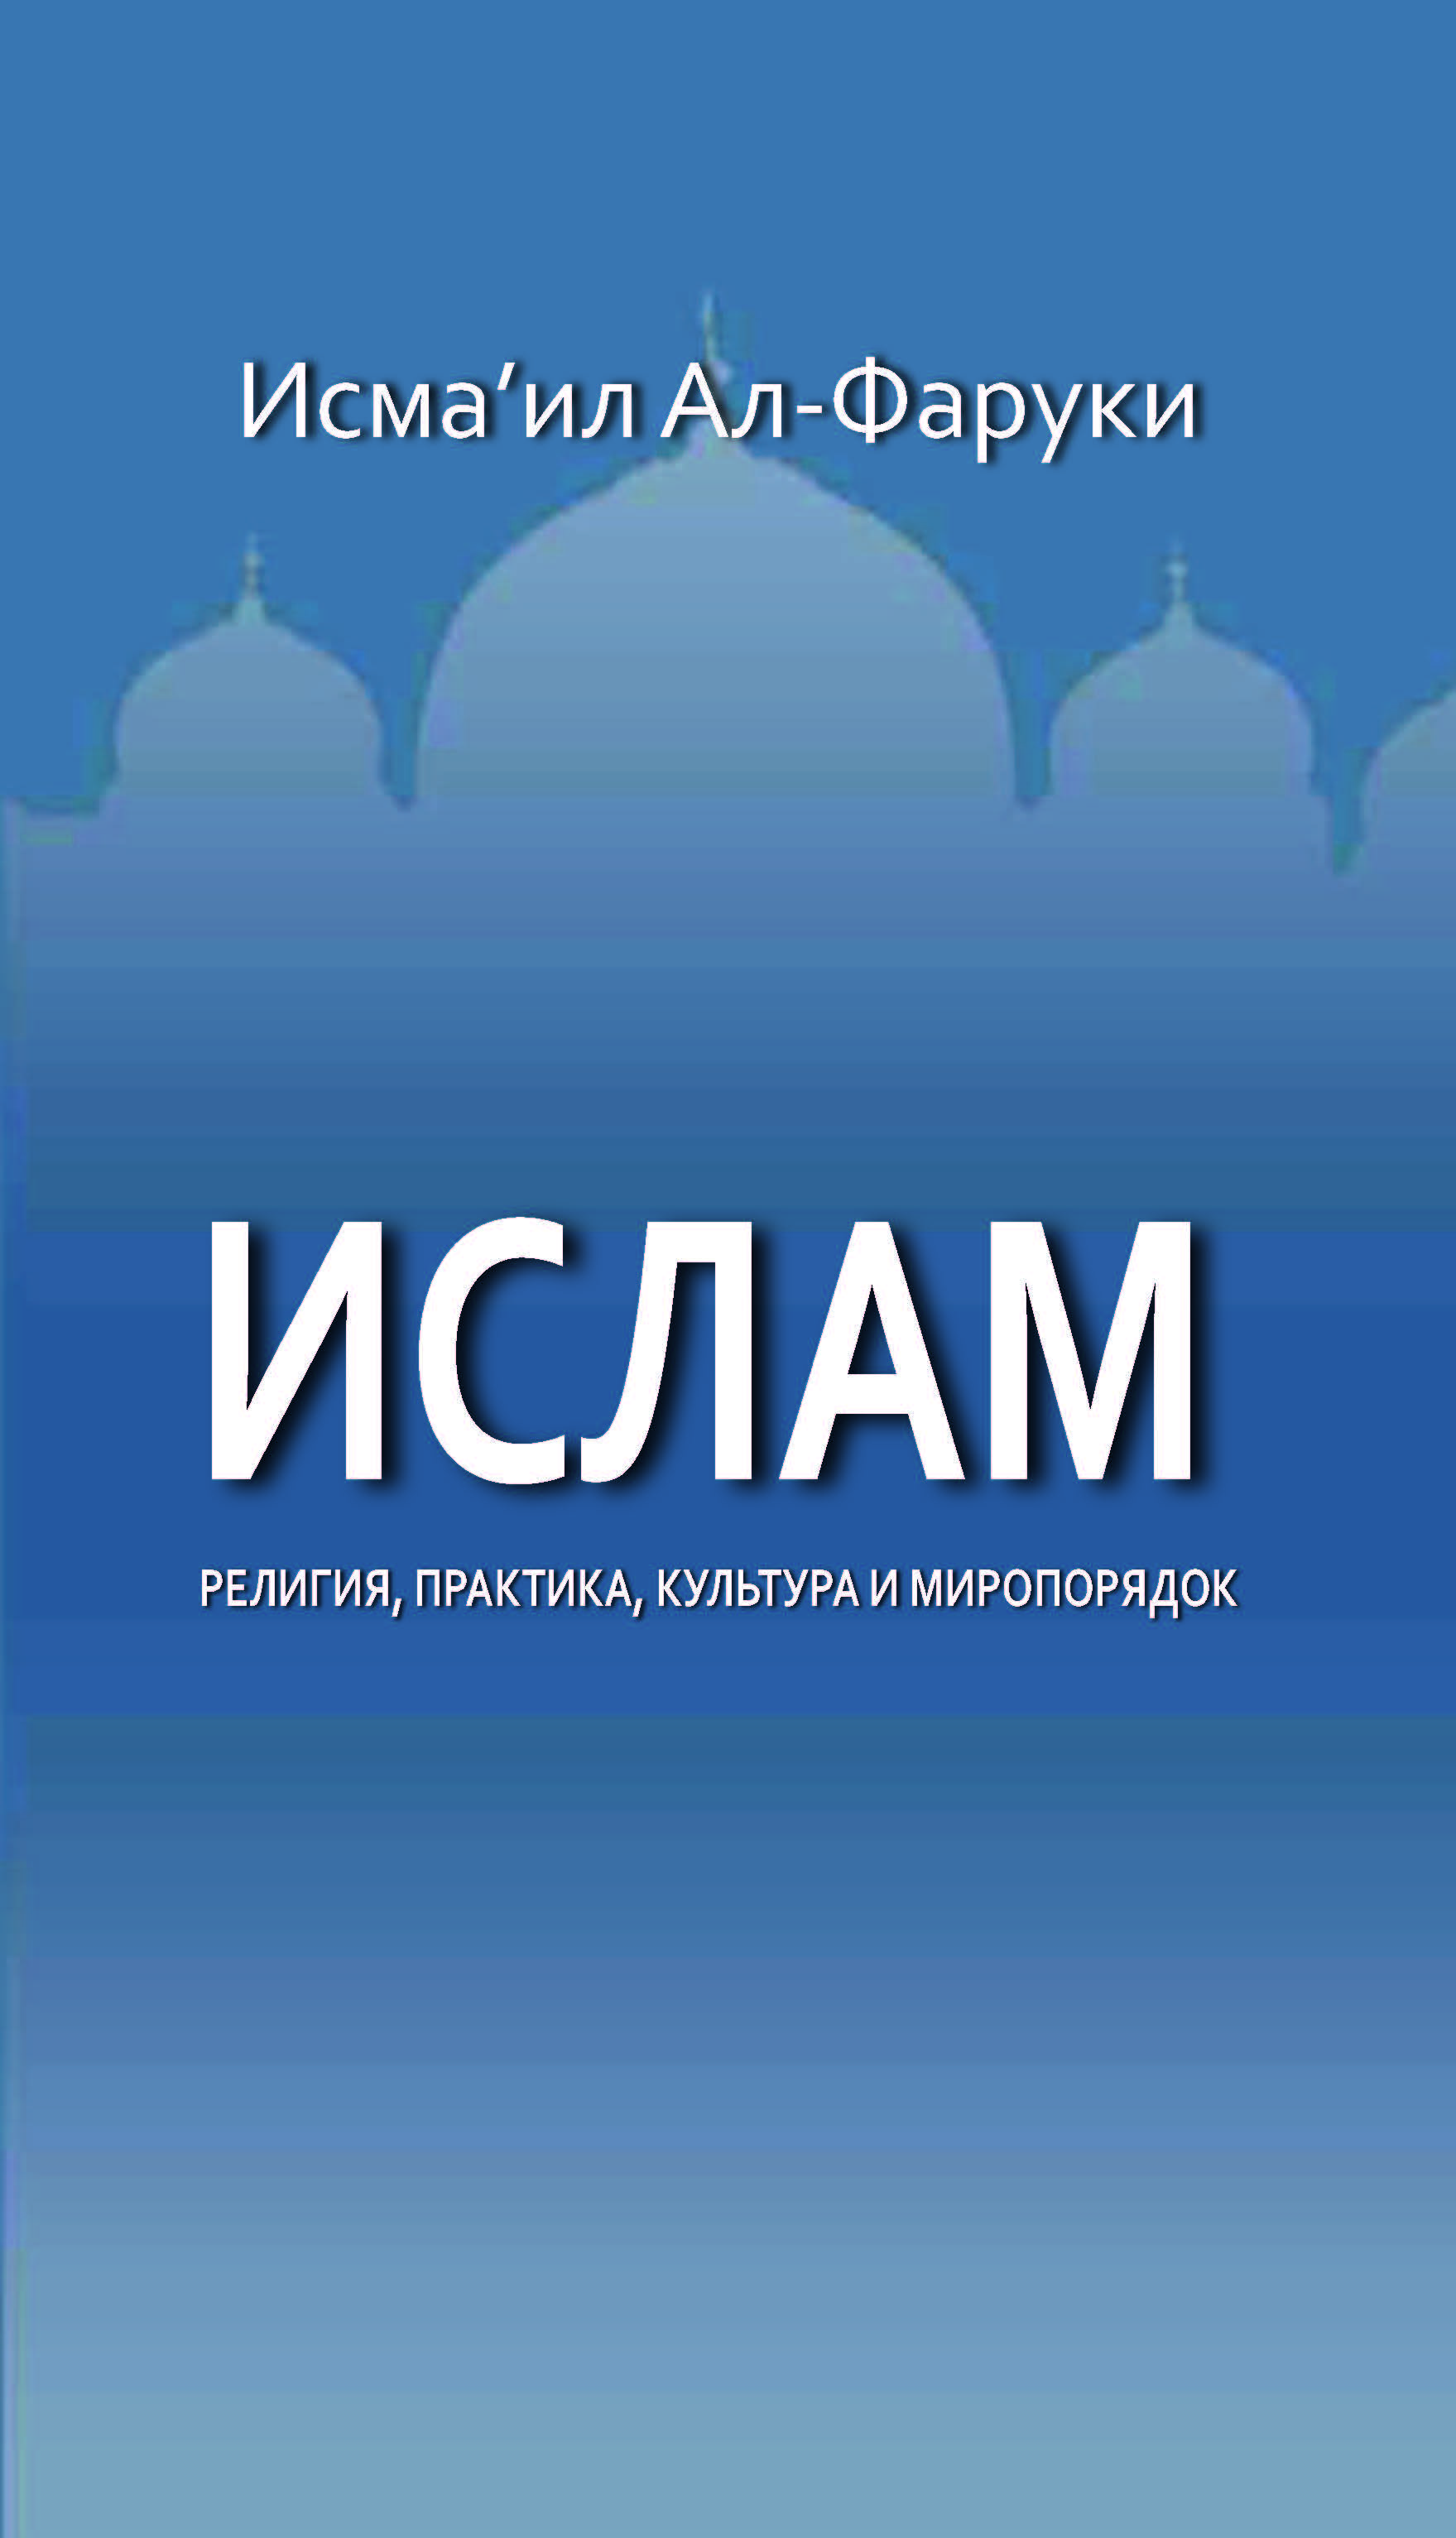 Russian: ИСЛАМ Религия, практика, культура и миропорядок (Islam: Religion, Practice, Culture & World Order)